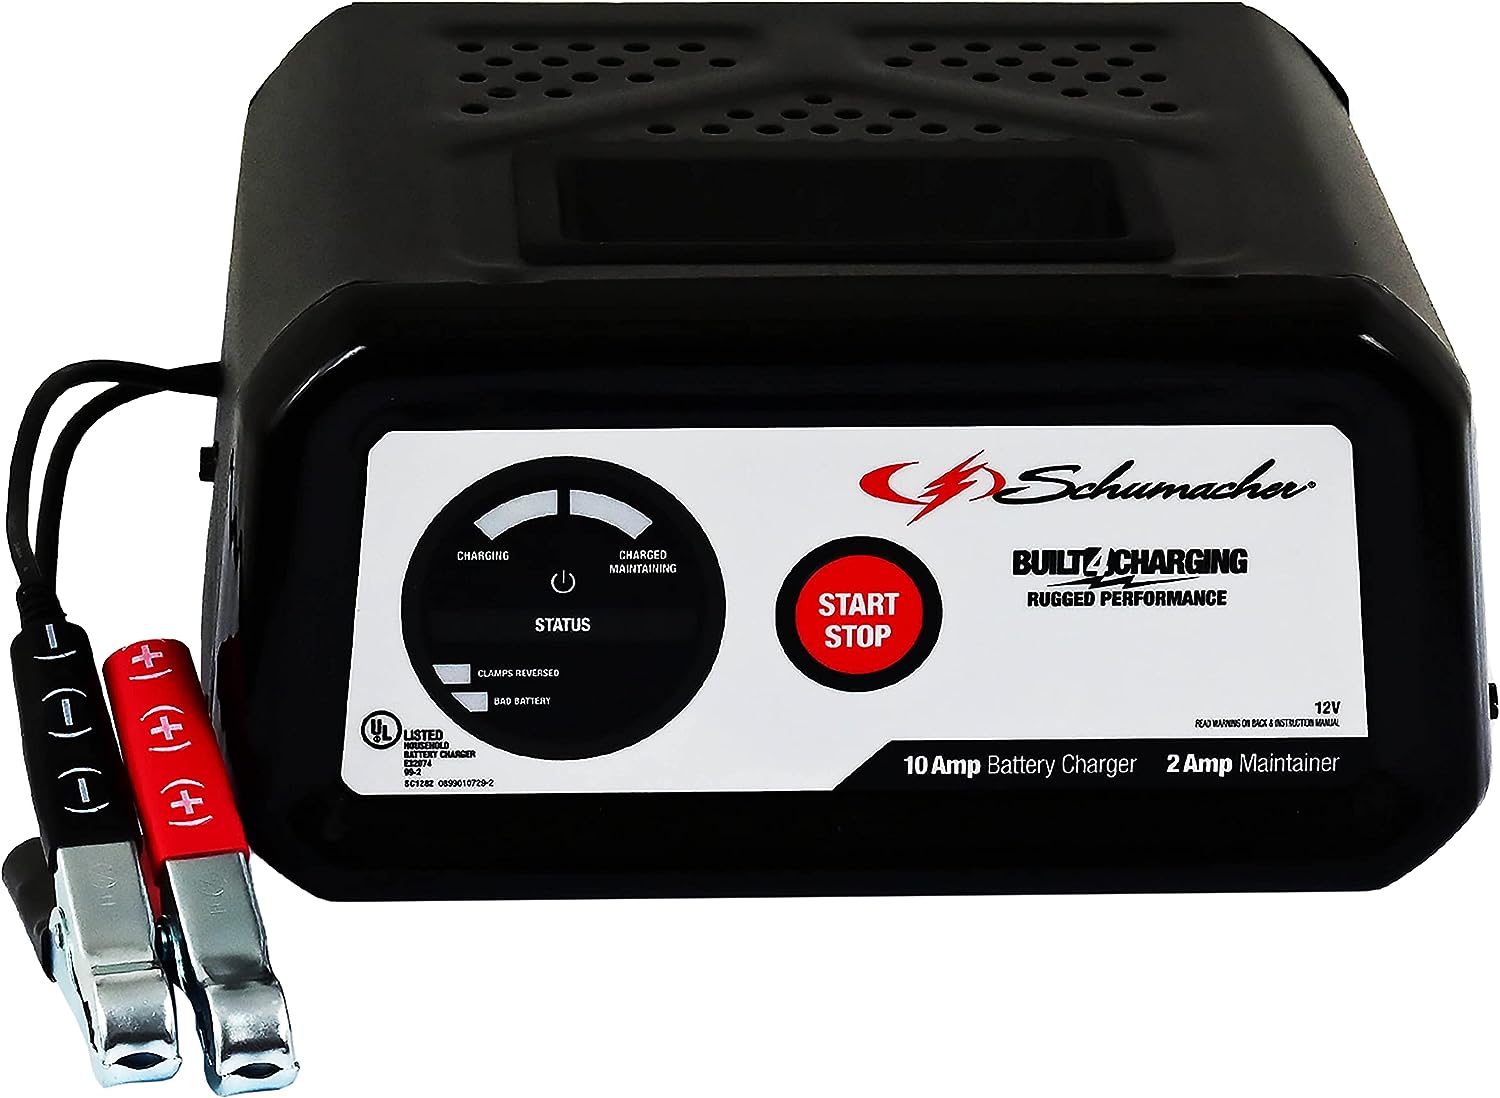 Schumacher SC1282 Battery Charger Review